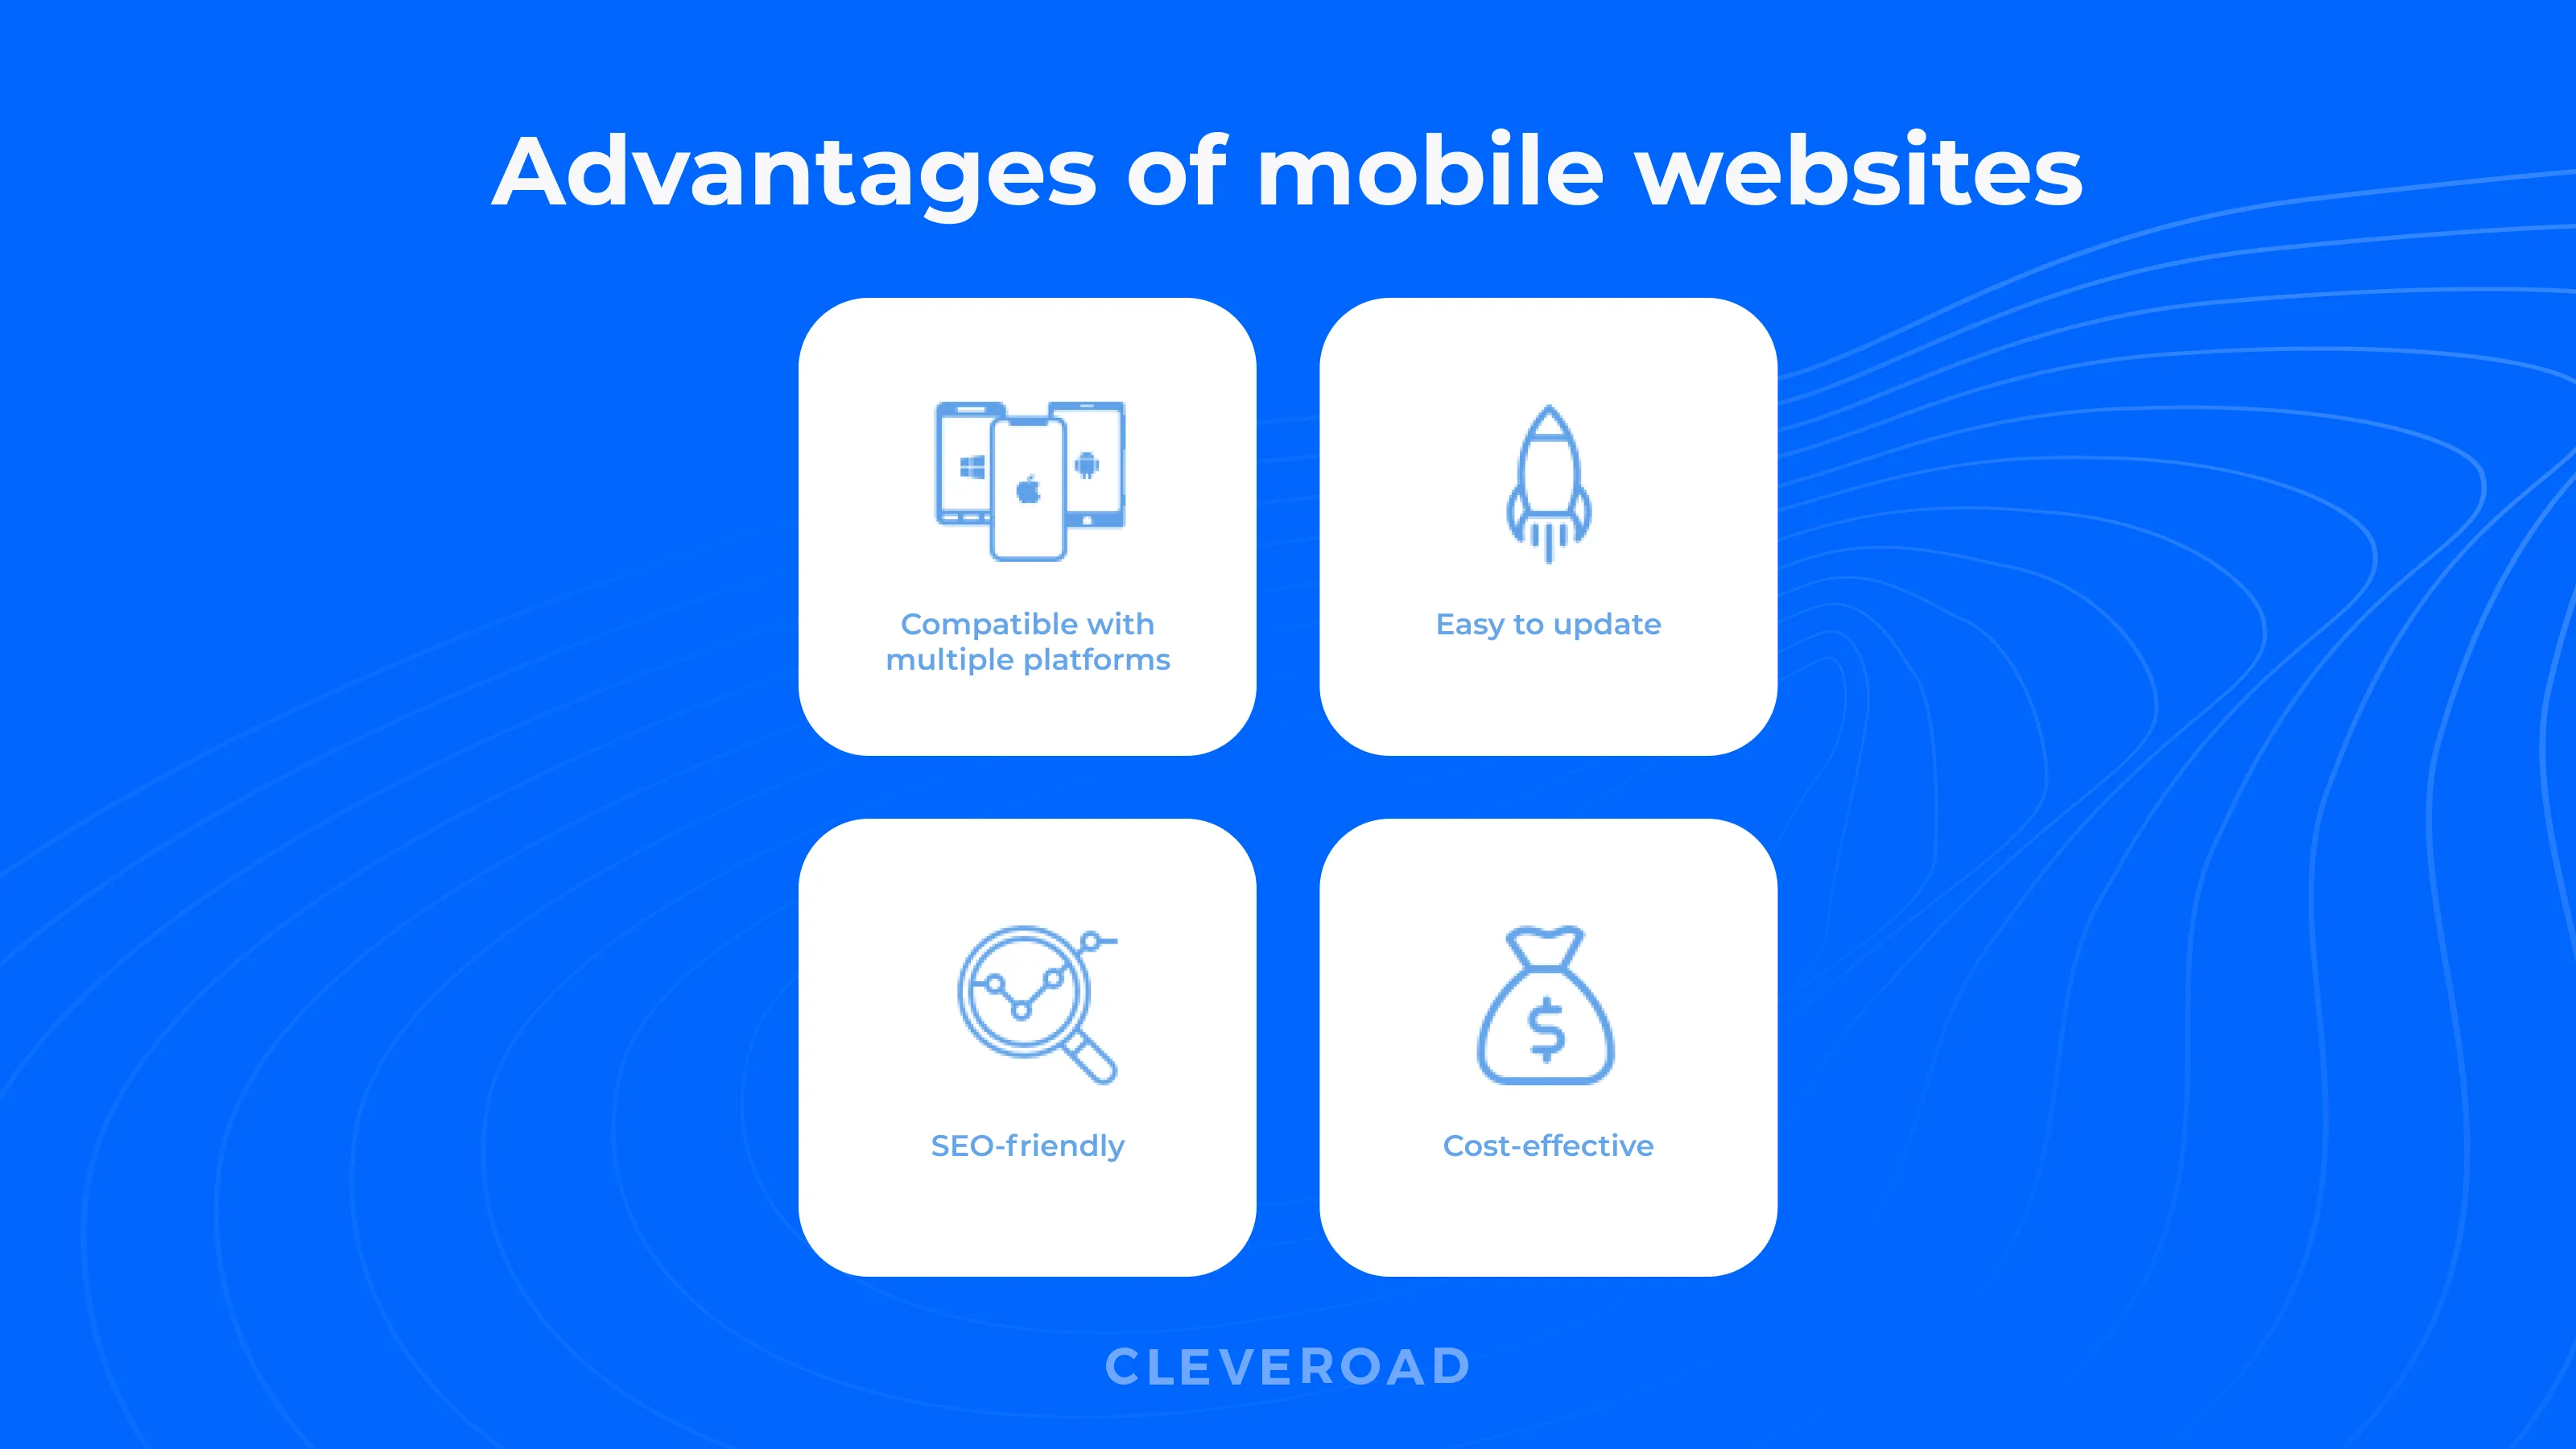 Advantages of mobile website versus mobile app